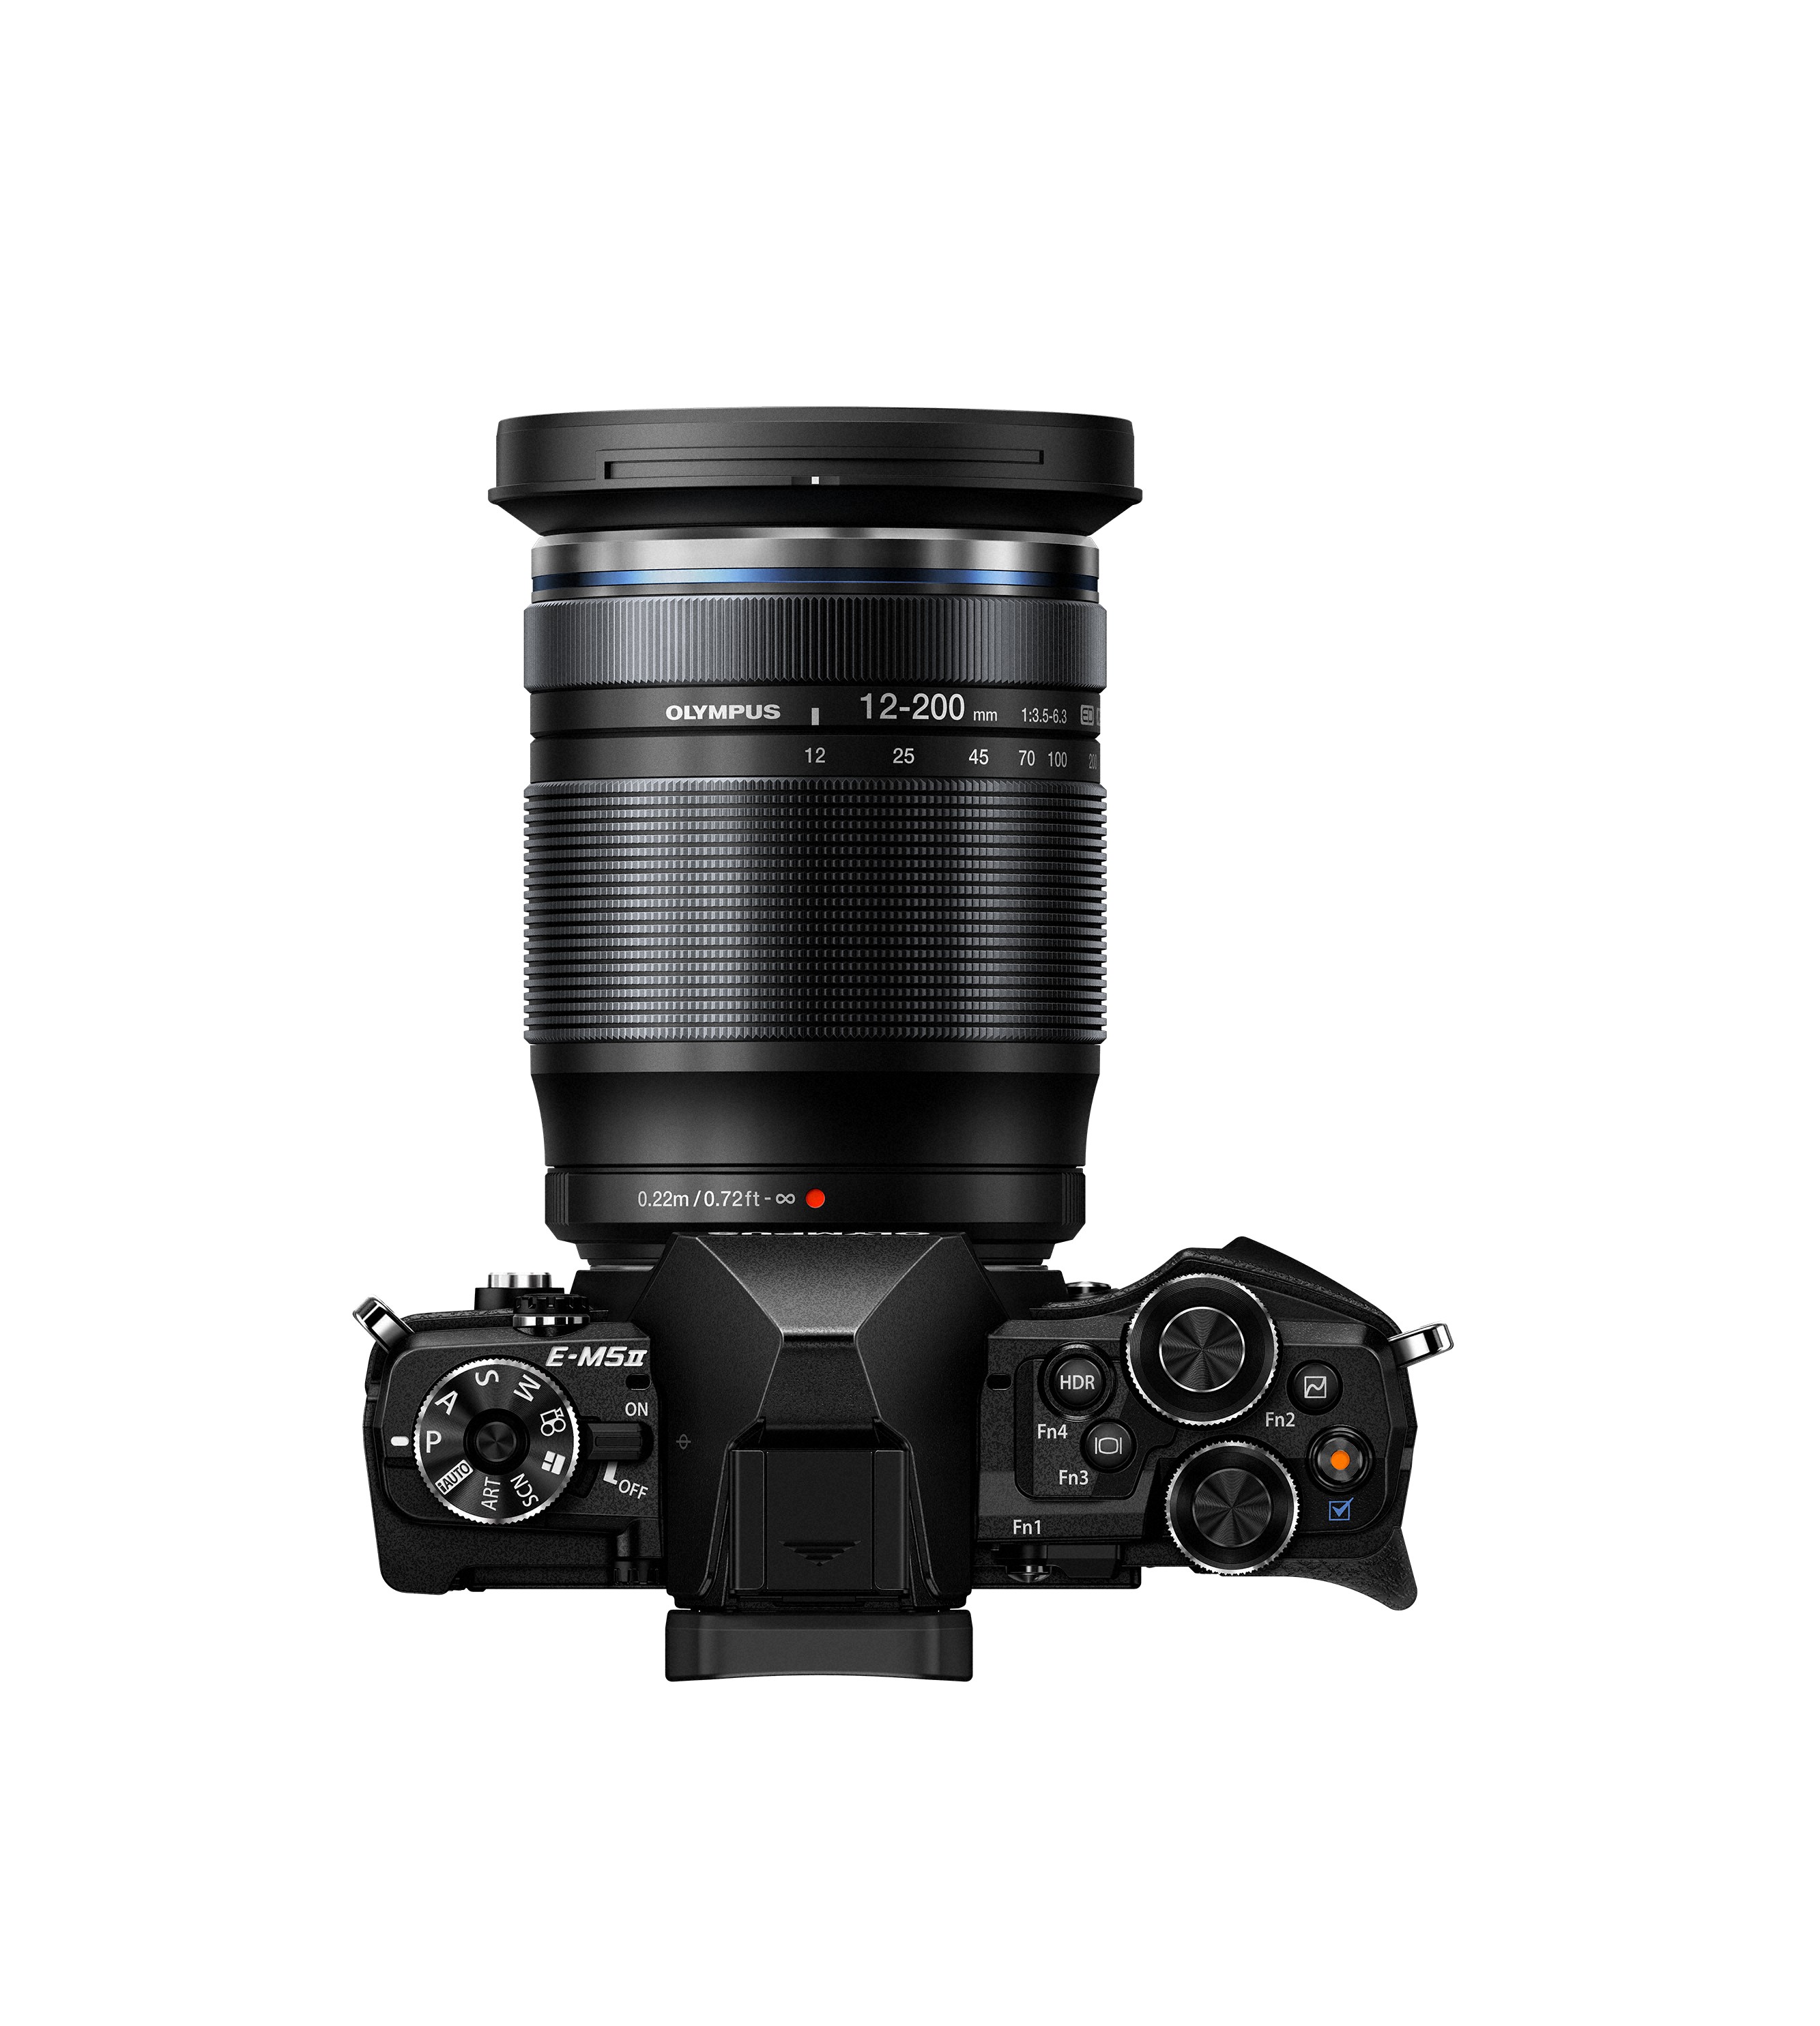 Olympus M.Zuiko Digital ED 12-200 F3.5-6.3 Lens Announced